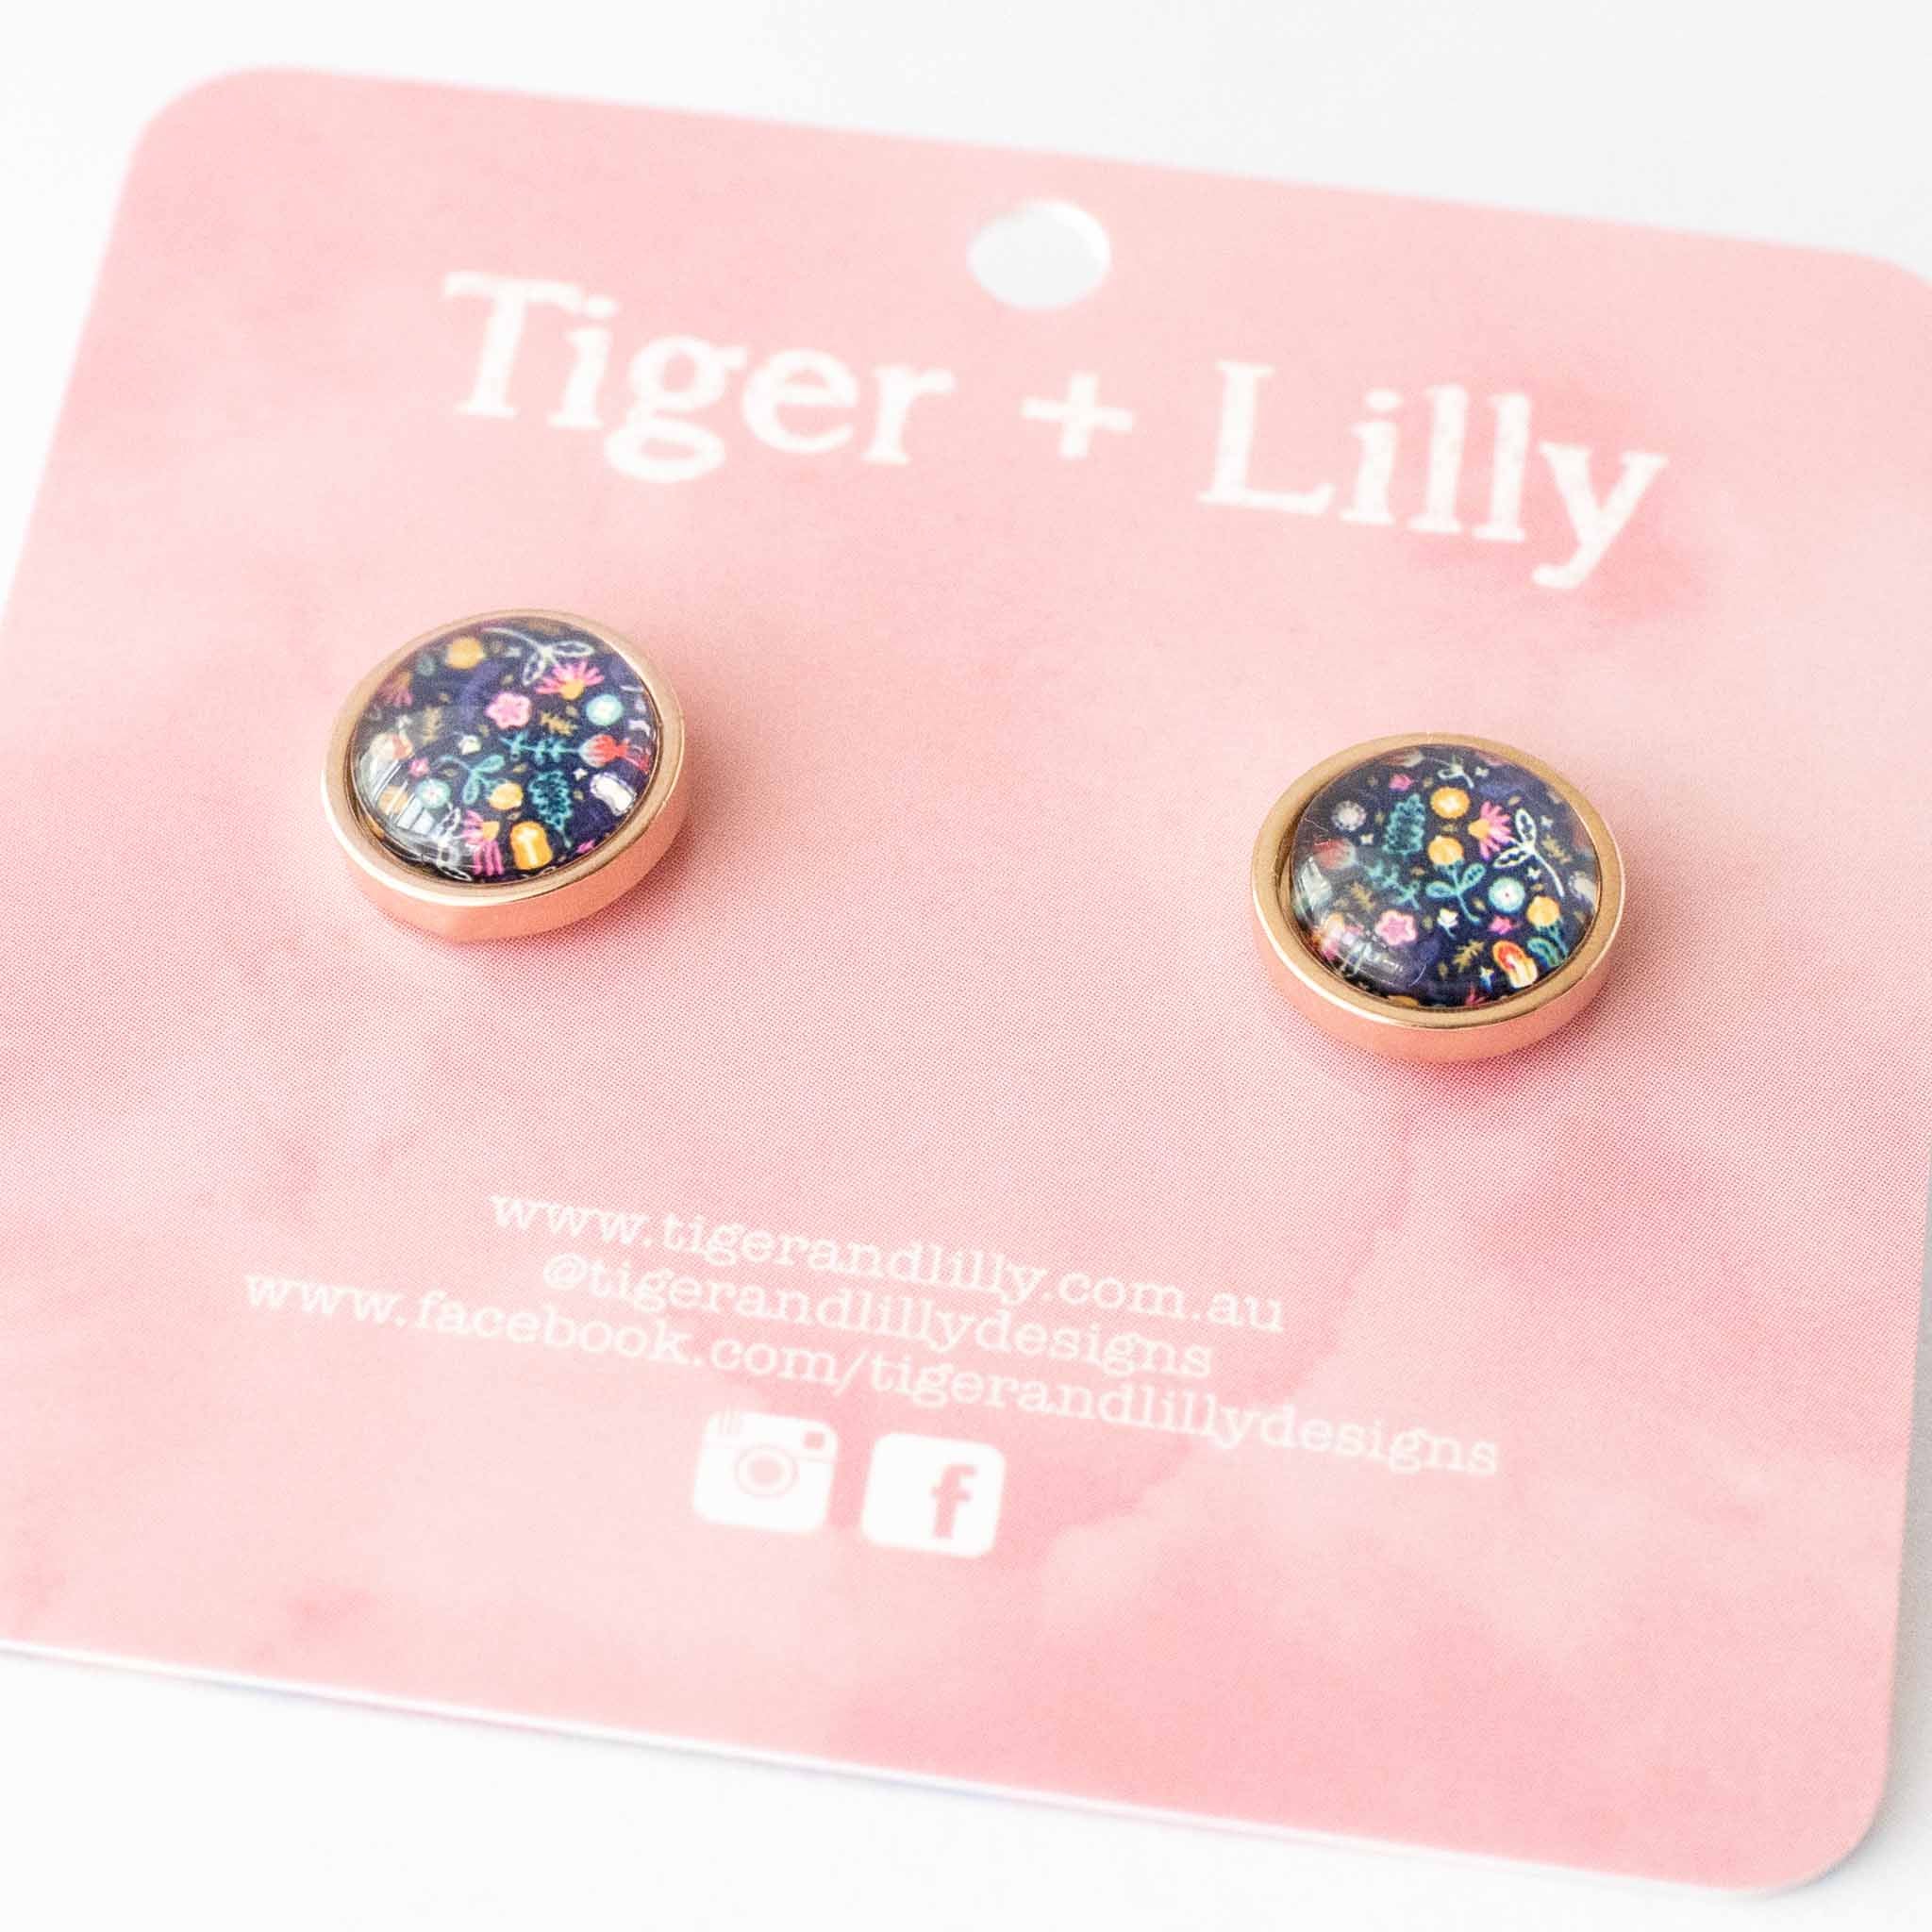 Tiger + Lilly - Alaska - Rose Gold Studs